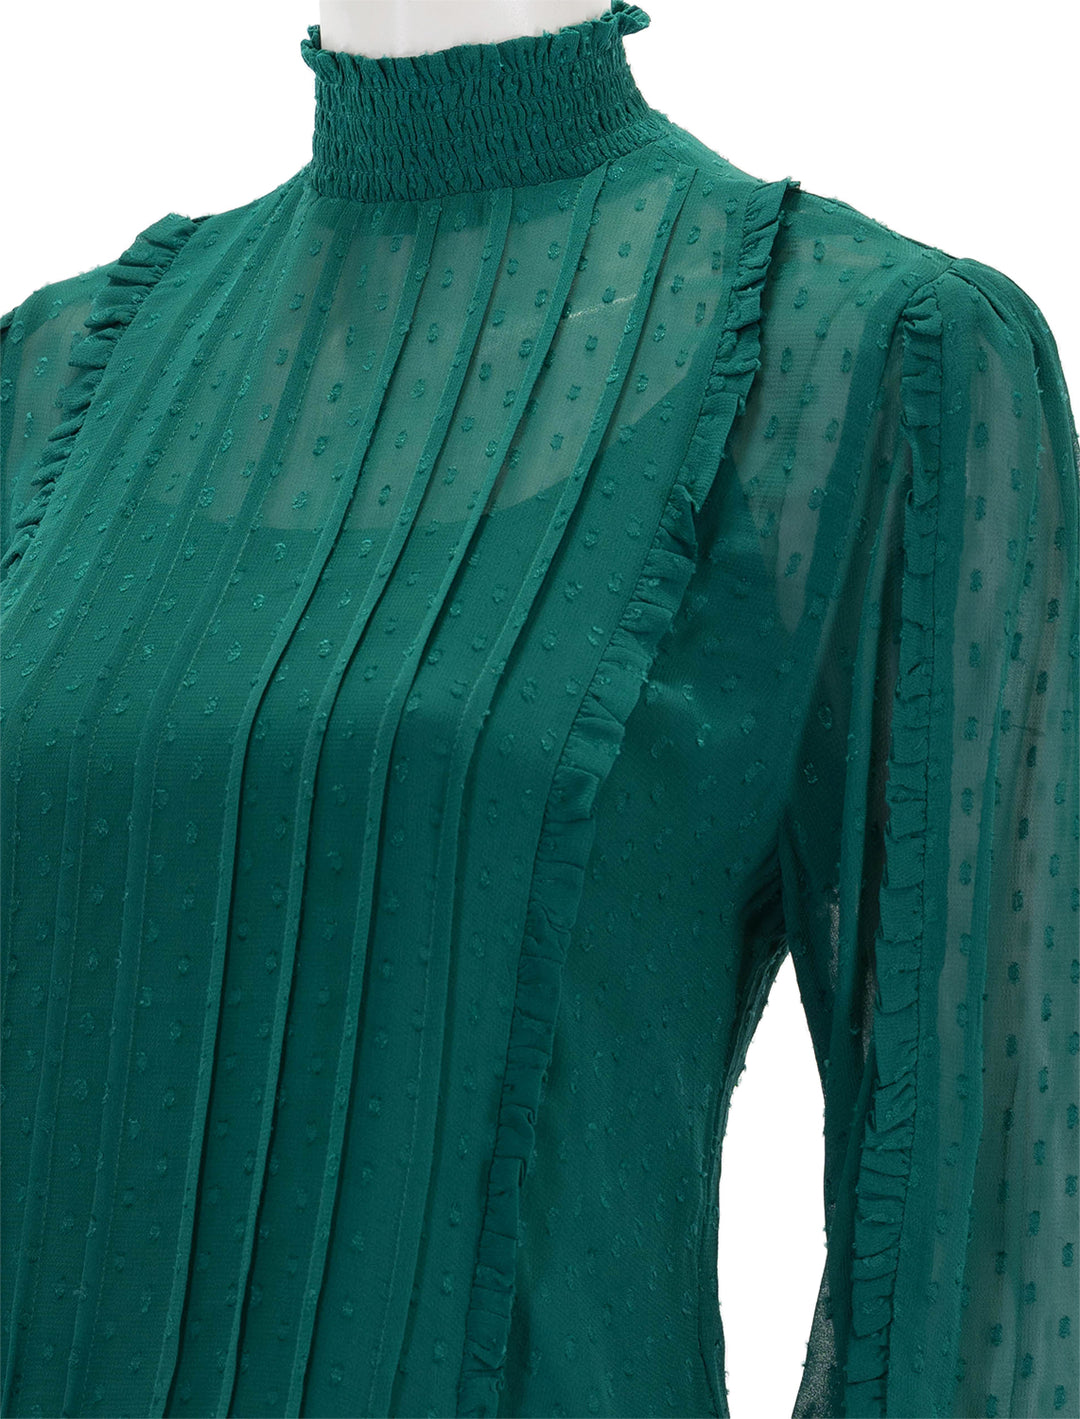 Close-up view of FARM Rio's emerald ruffled blouse.